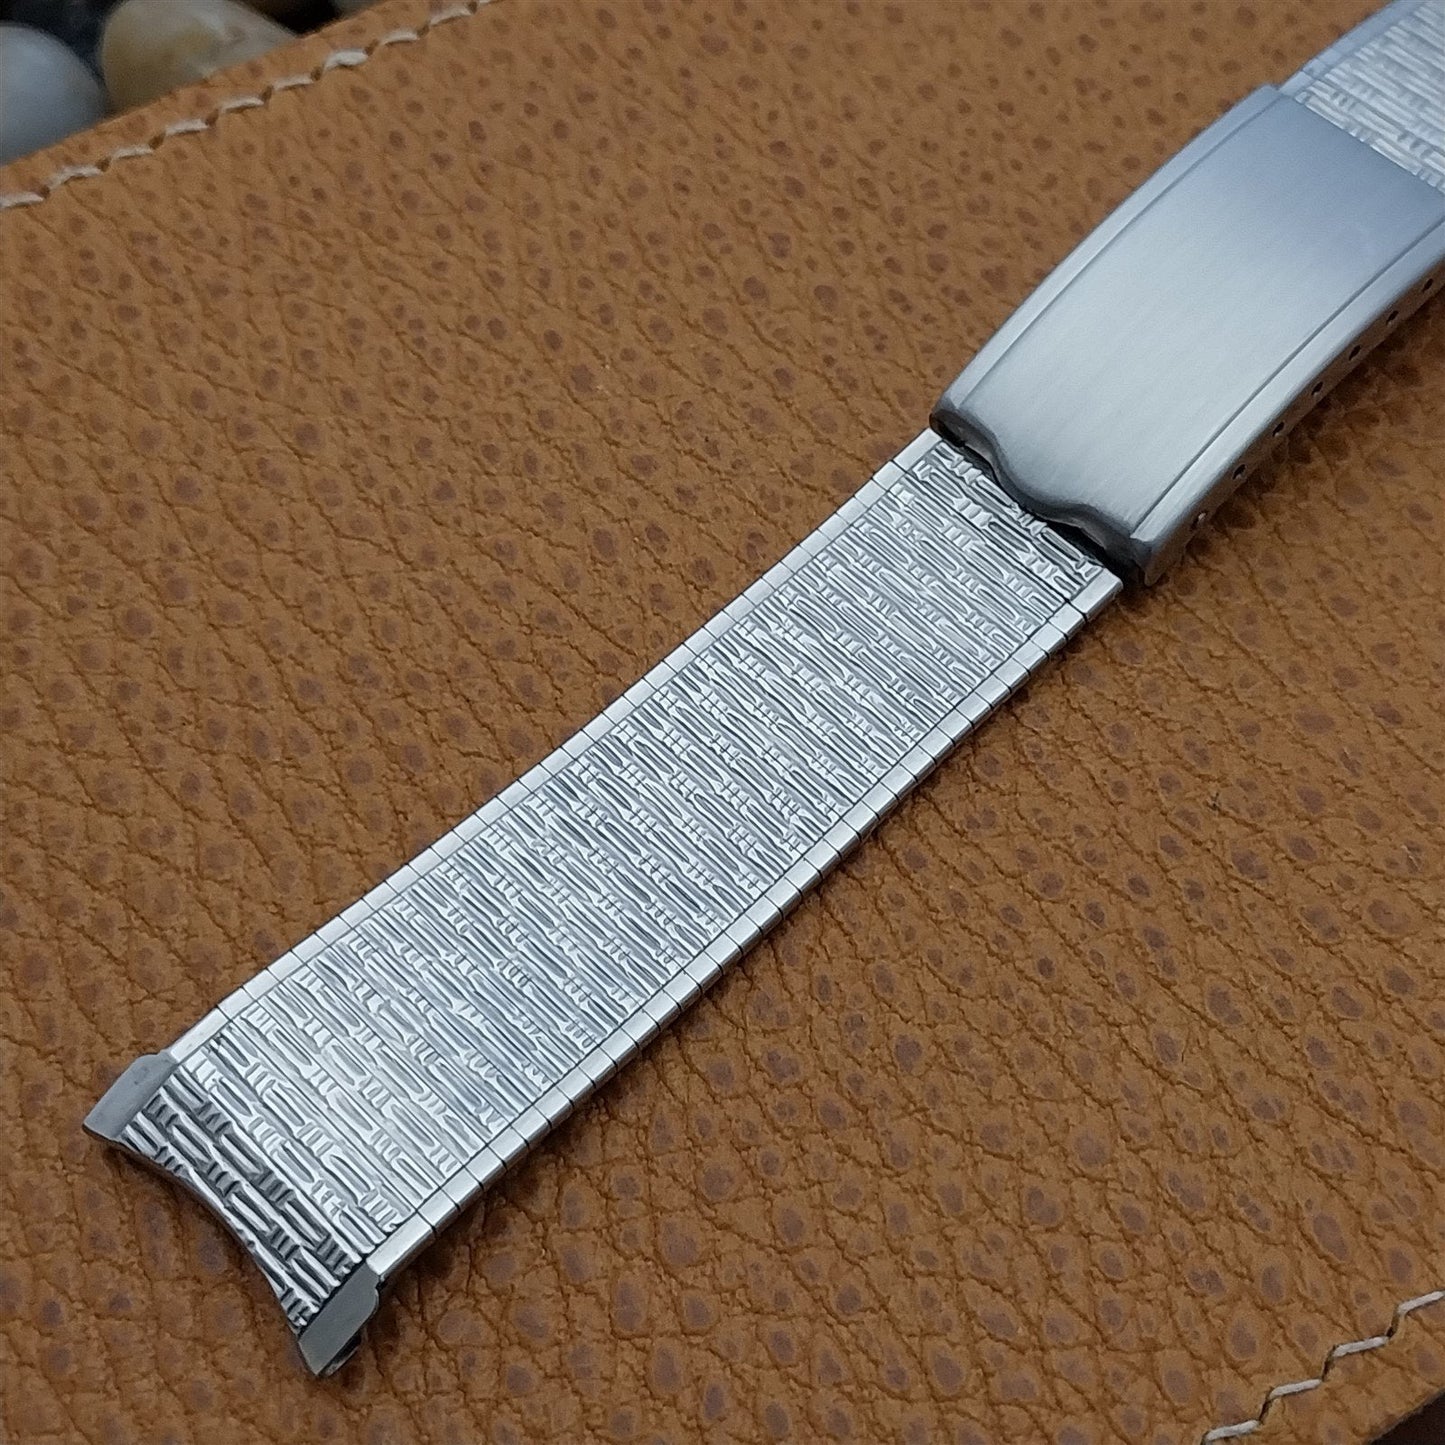 19mm 18mm 17.2mm Stainless Steel Kreisler USA Unused 1960s Vintage Watch Band